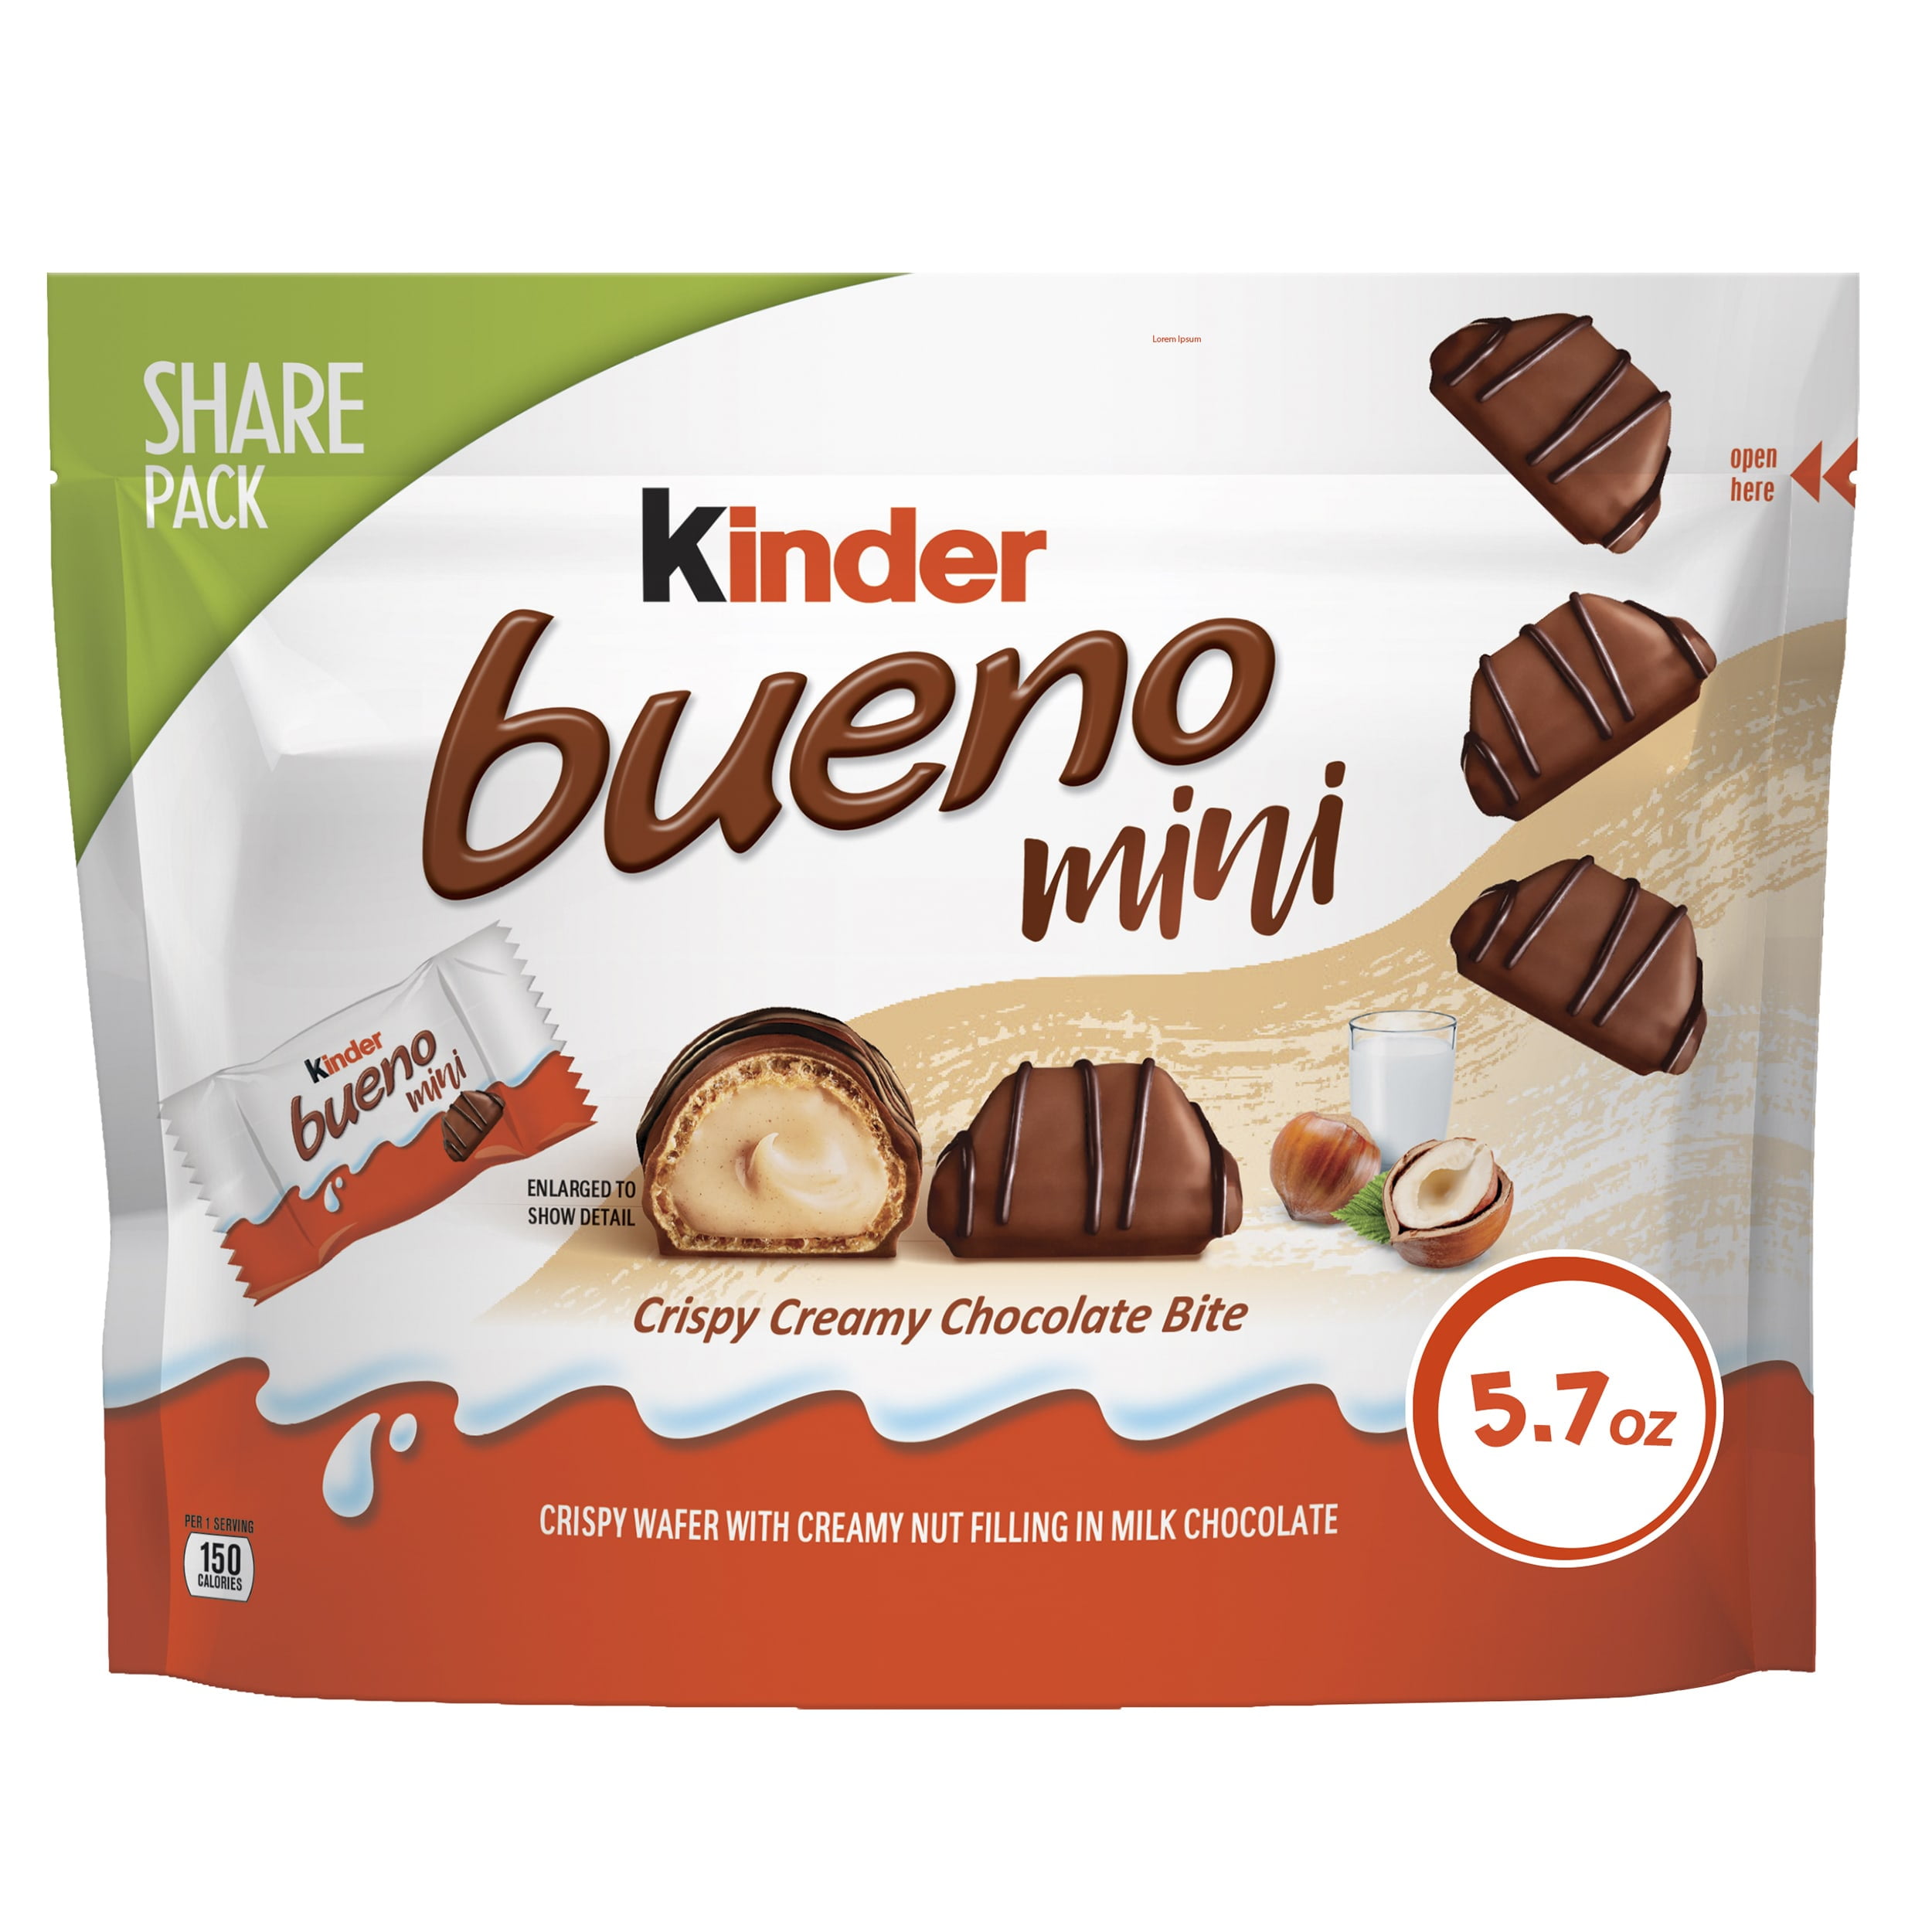 Kinder Bueno Milk Chocolate and Hazelnut Cream, Individually Wrapped Mini Chocolate Bars, 5.7 oz, Share Size